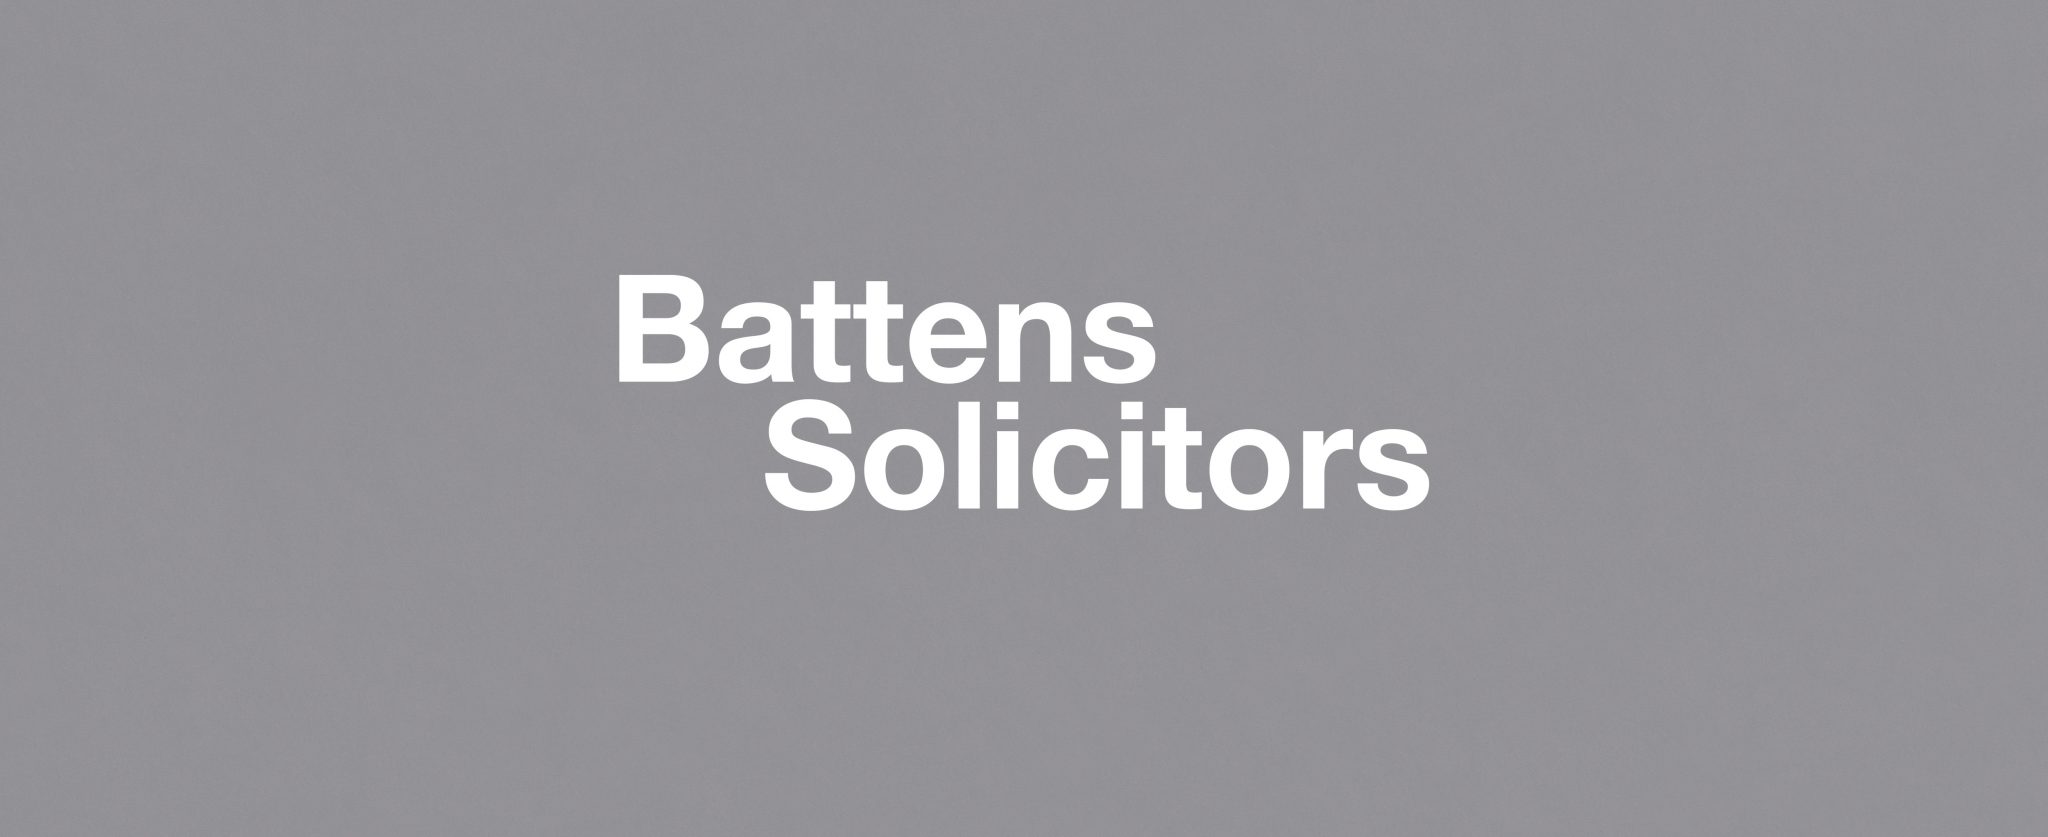 battens-logo